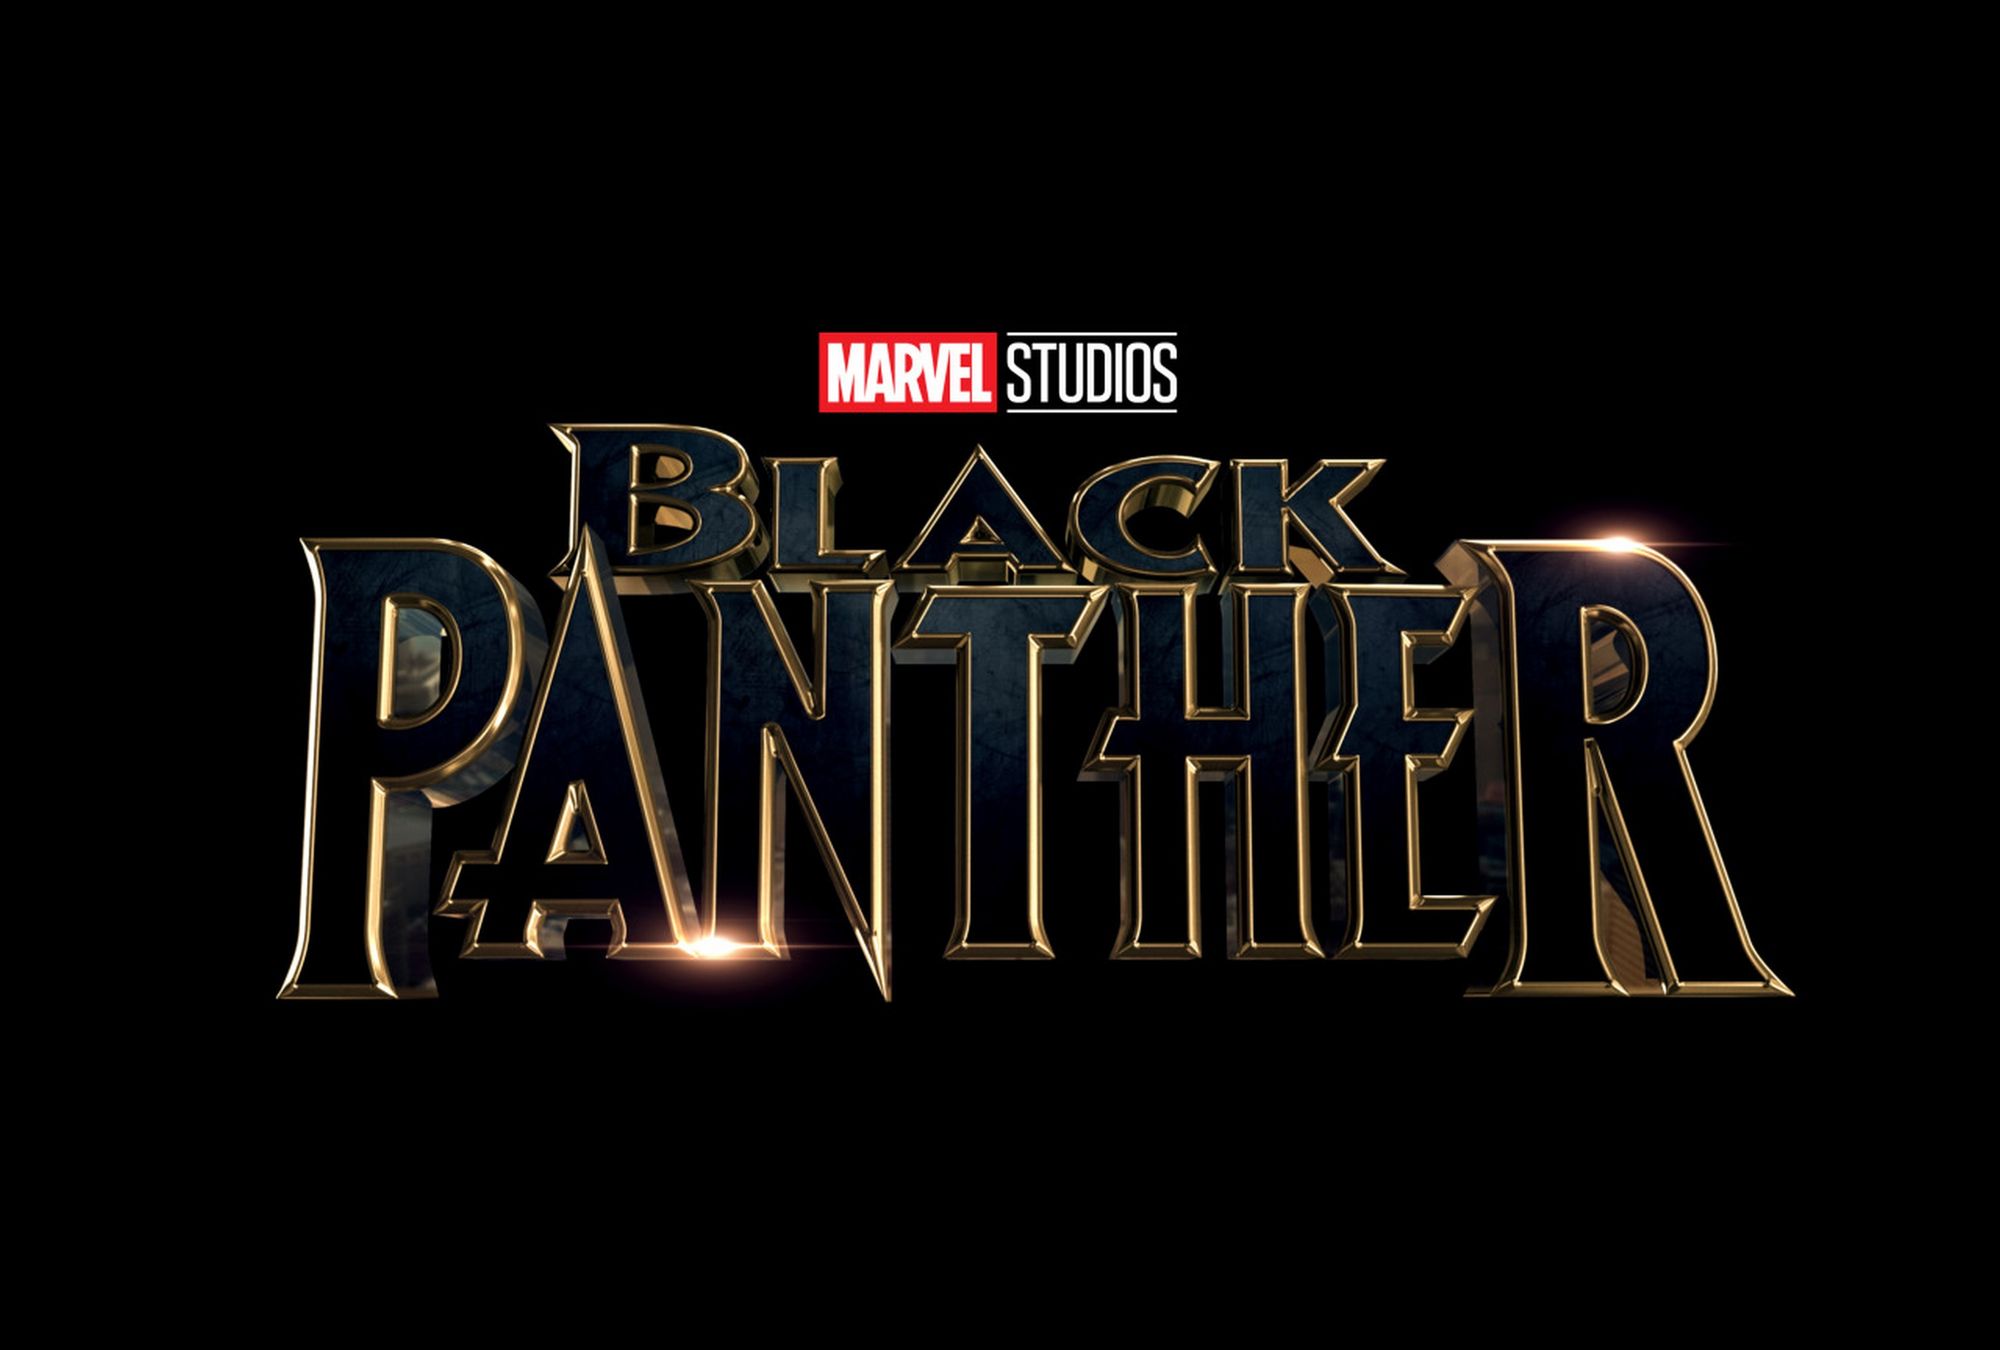 Black Panther trailer has arrived